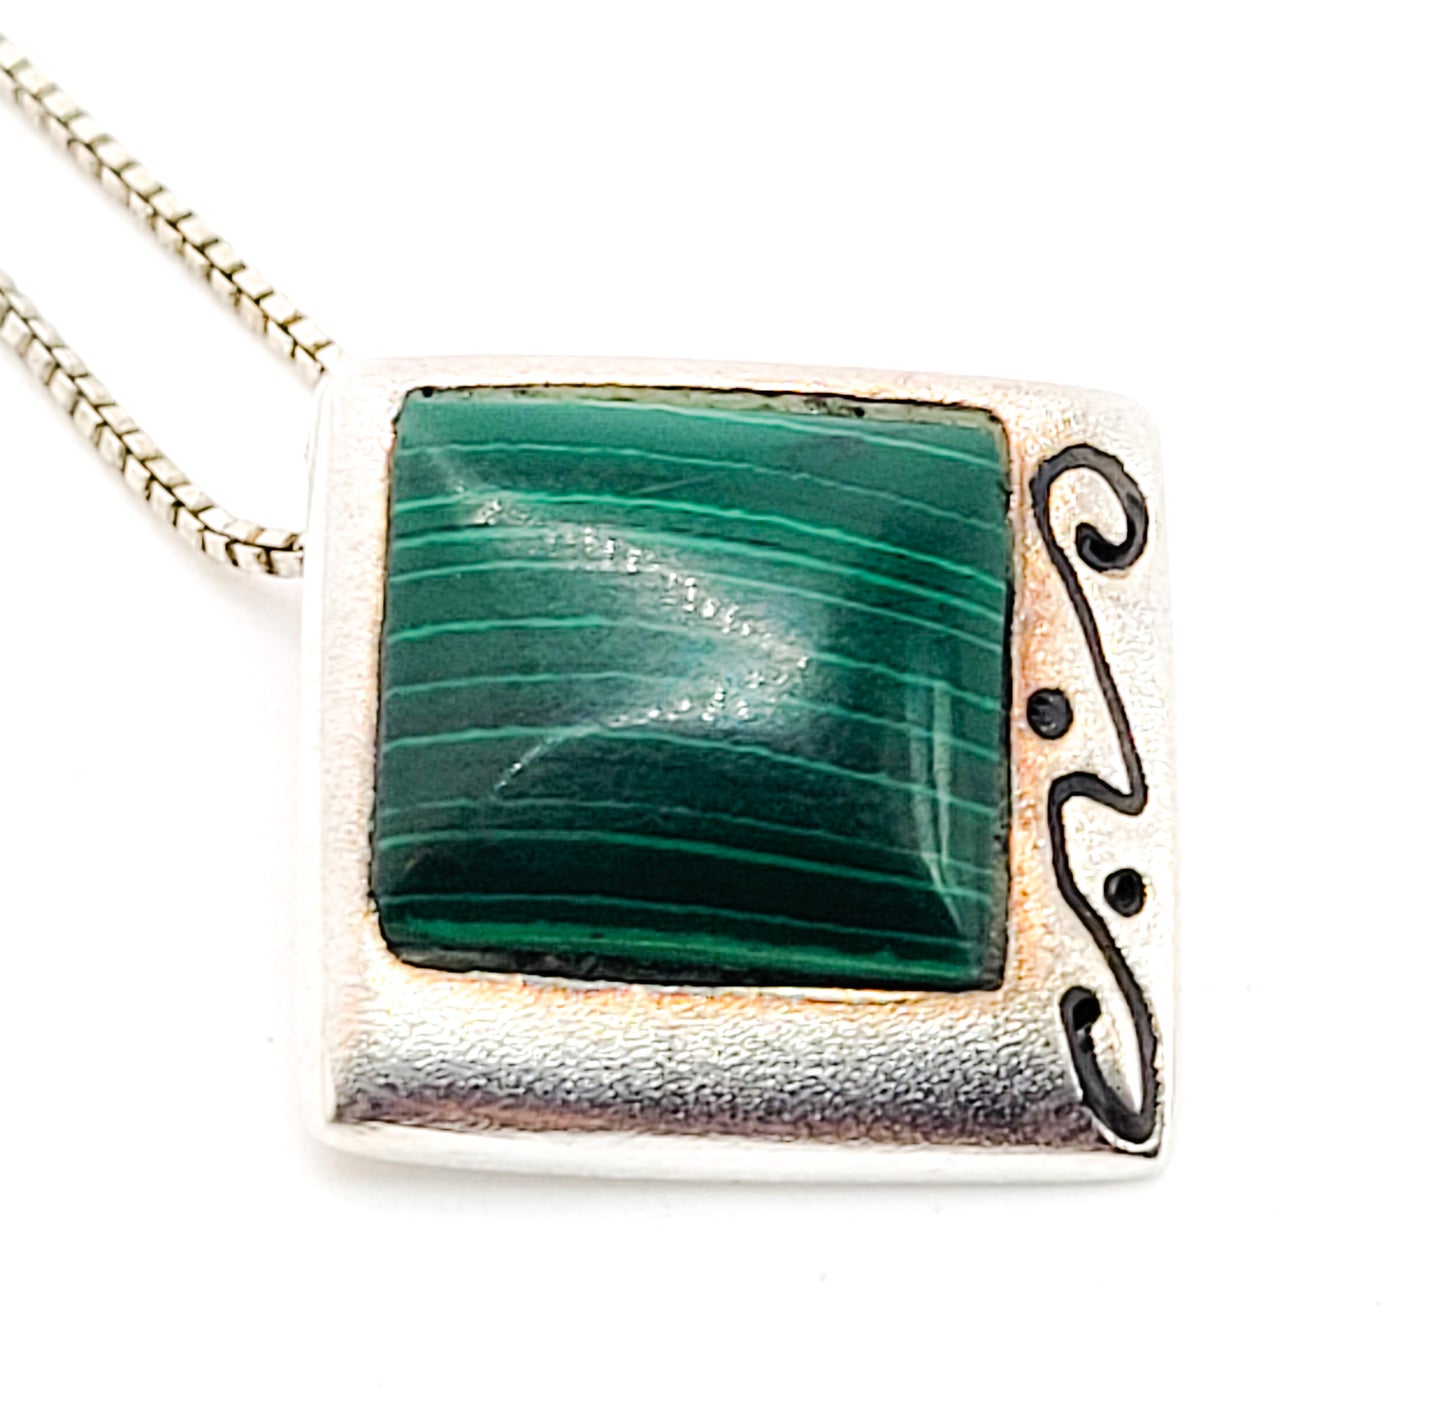 Banded Malachite green gemstone vintage sterling silver artisan pendant necklace